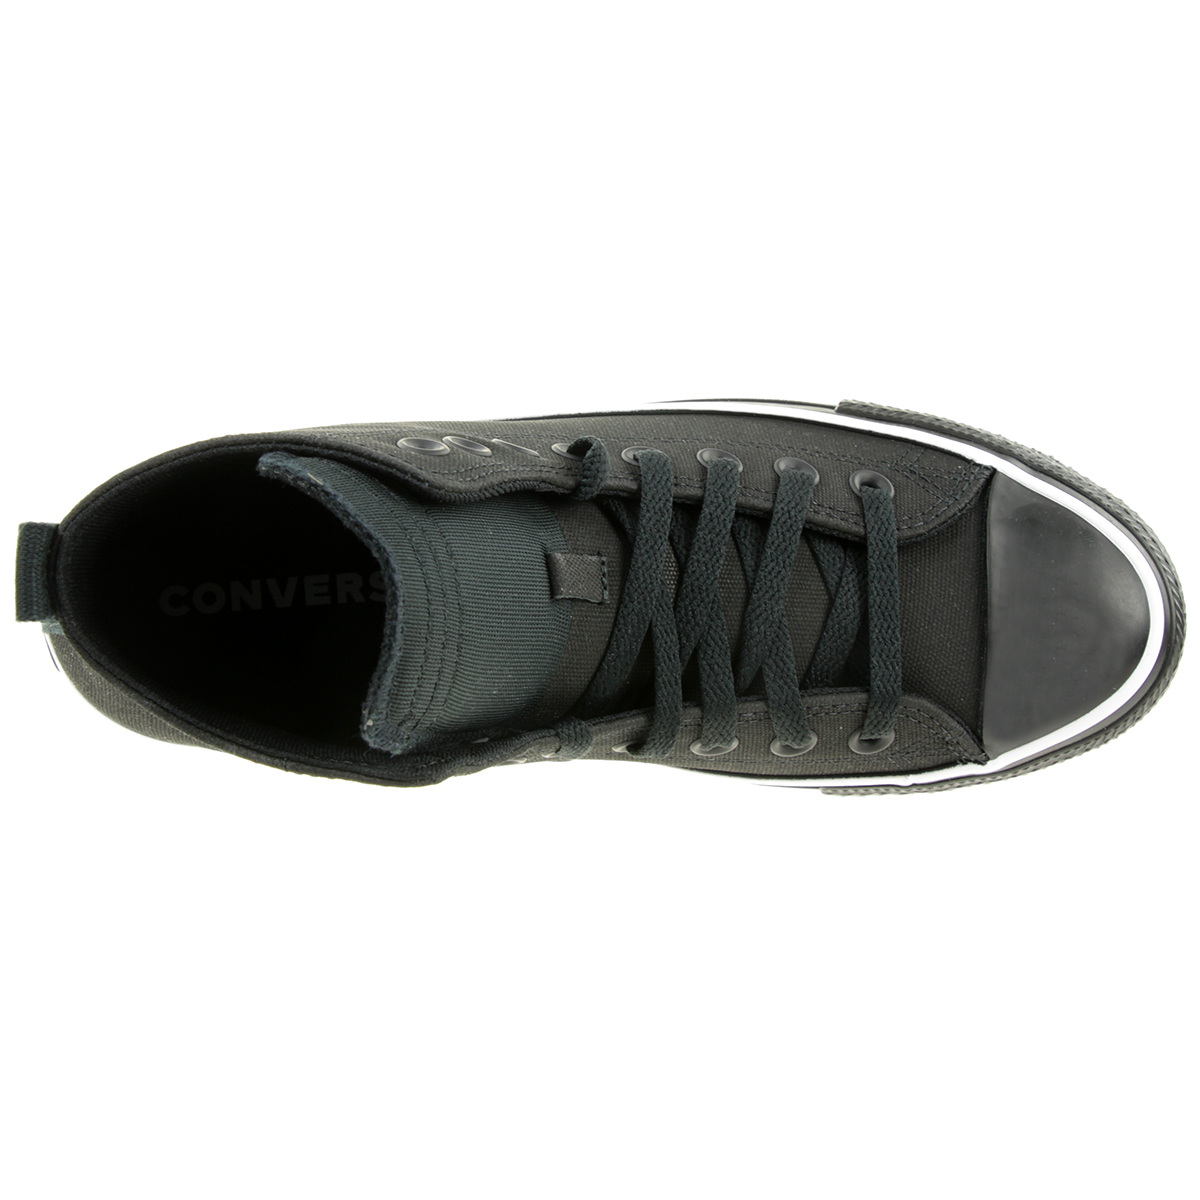 Converse Utility CTAS HI Sneaker Chuck Unisex Canvas Black 168710C